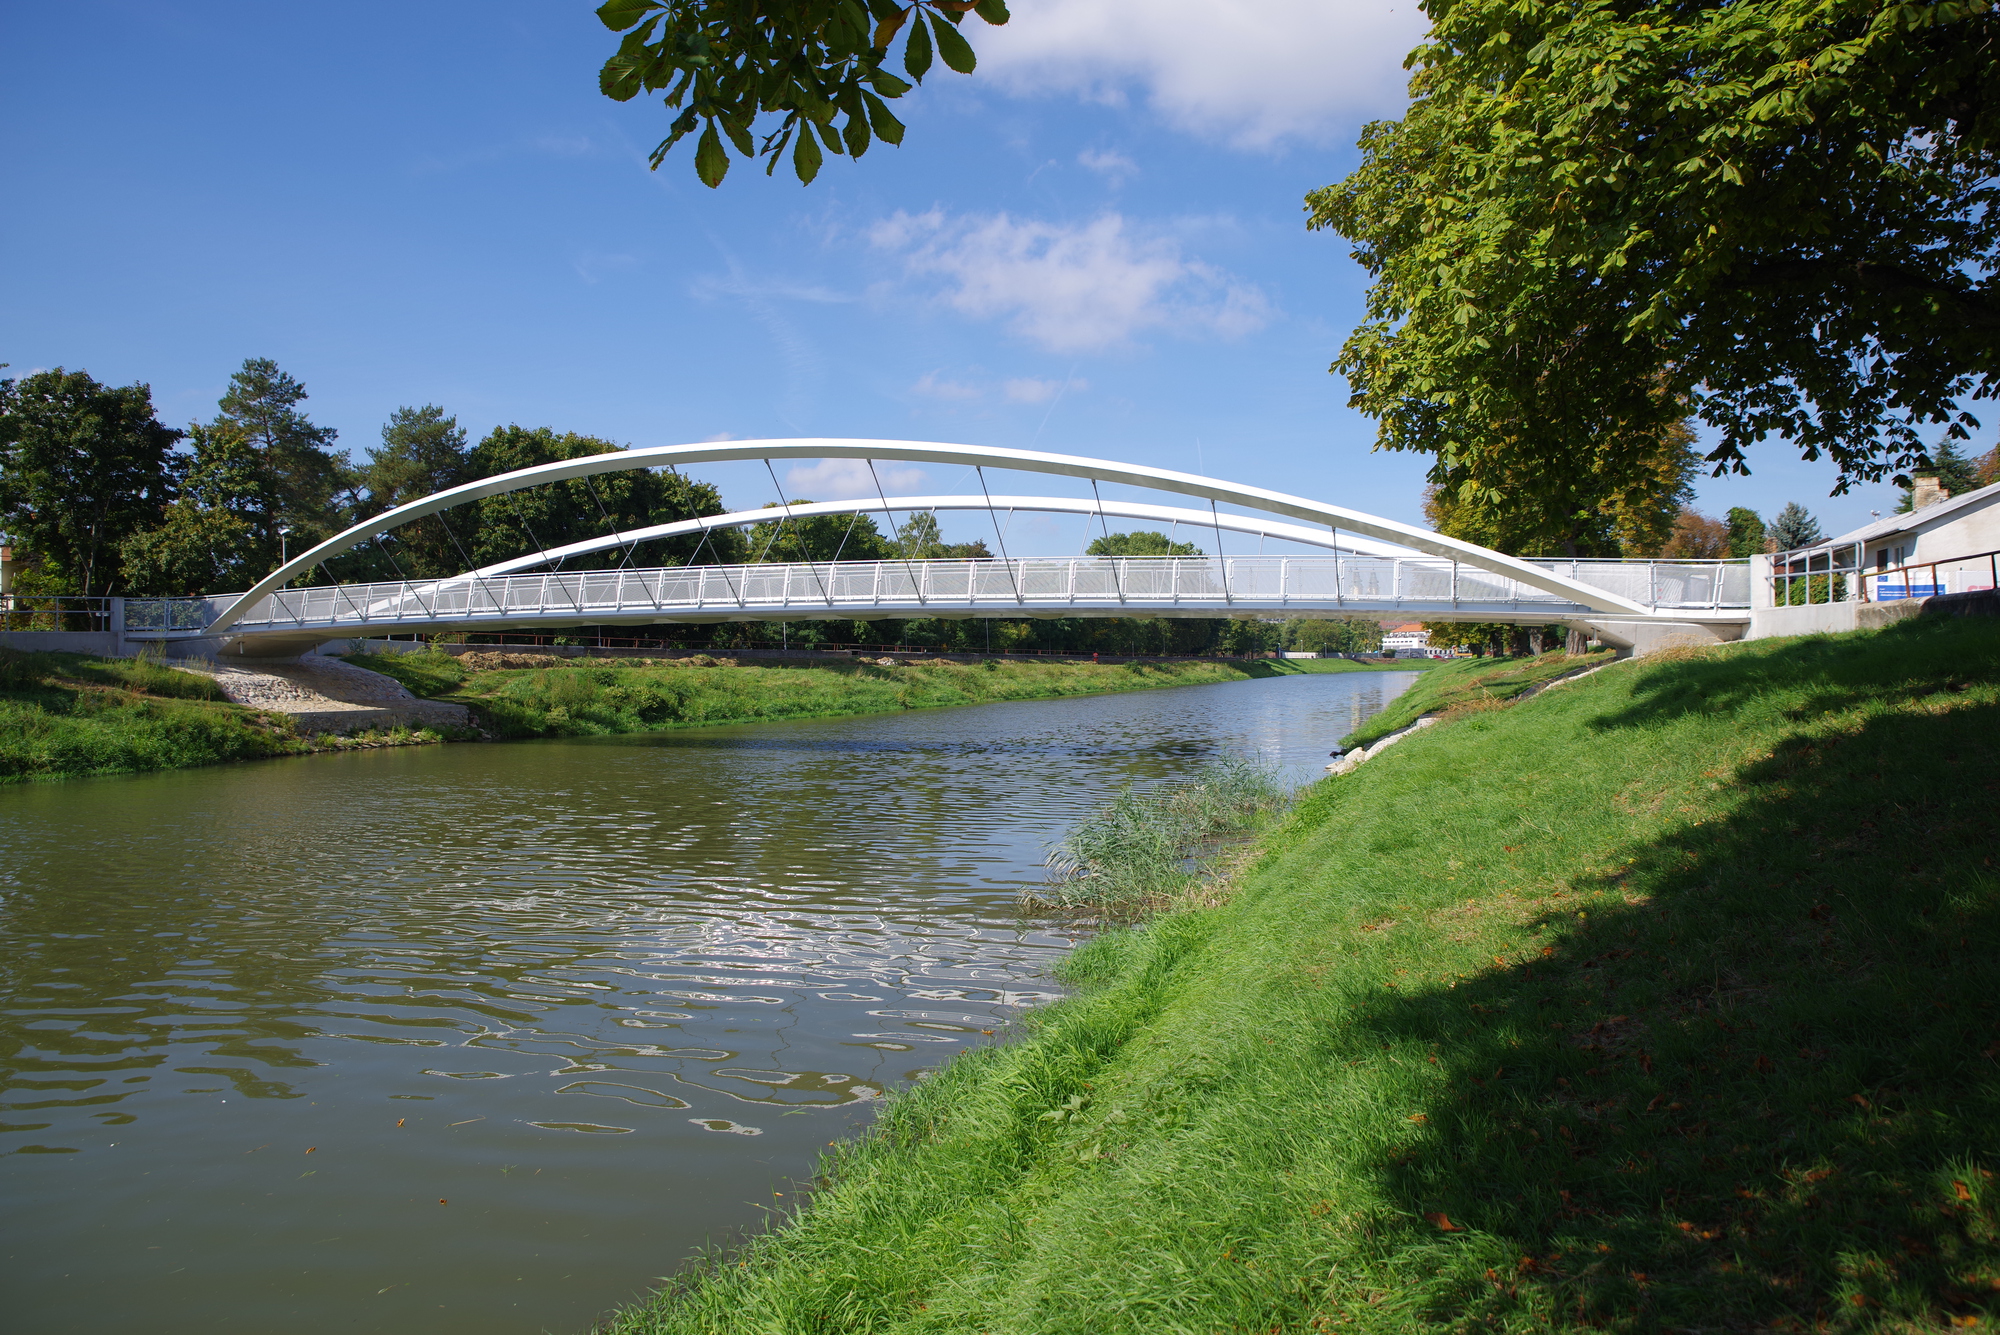  Kalvarsky Most - 横跨尼特拉河的自行车桥丨Kalvarsky Most - Cyclist Bridge across the River Nitra-21